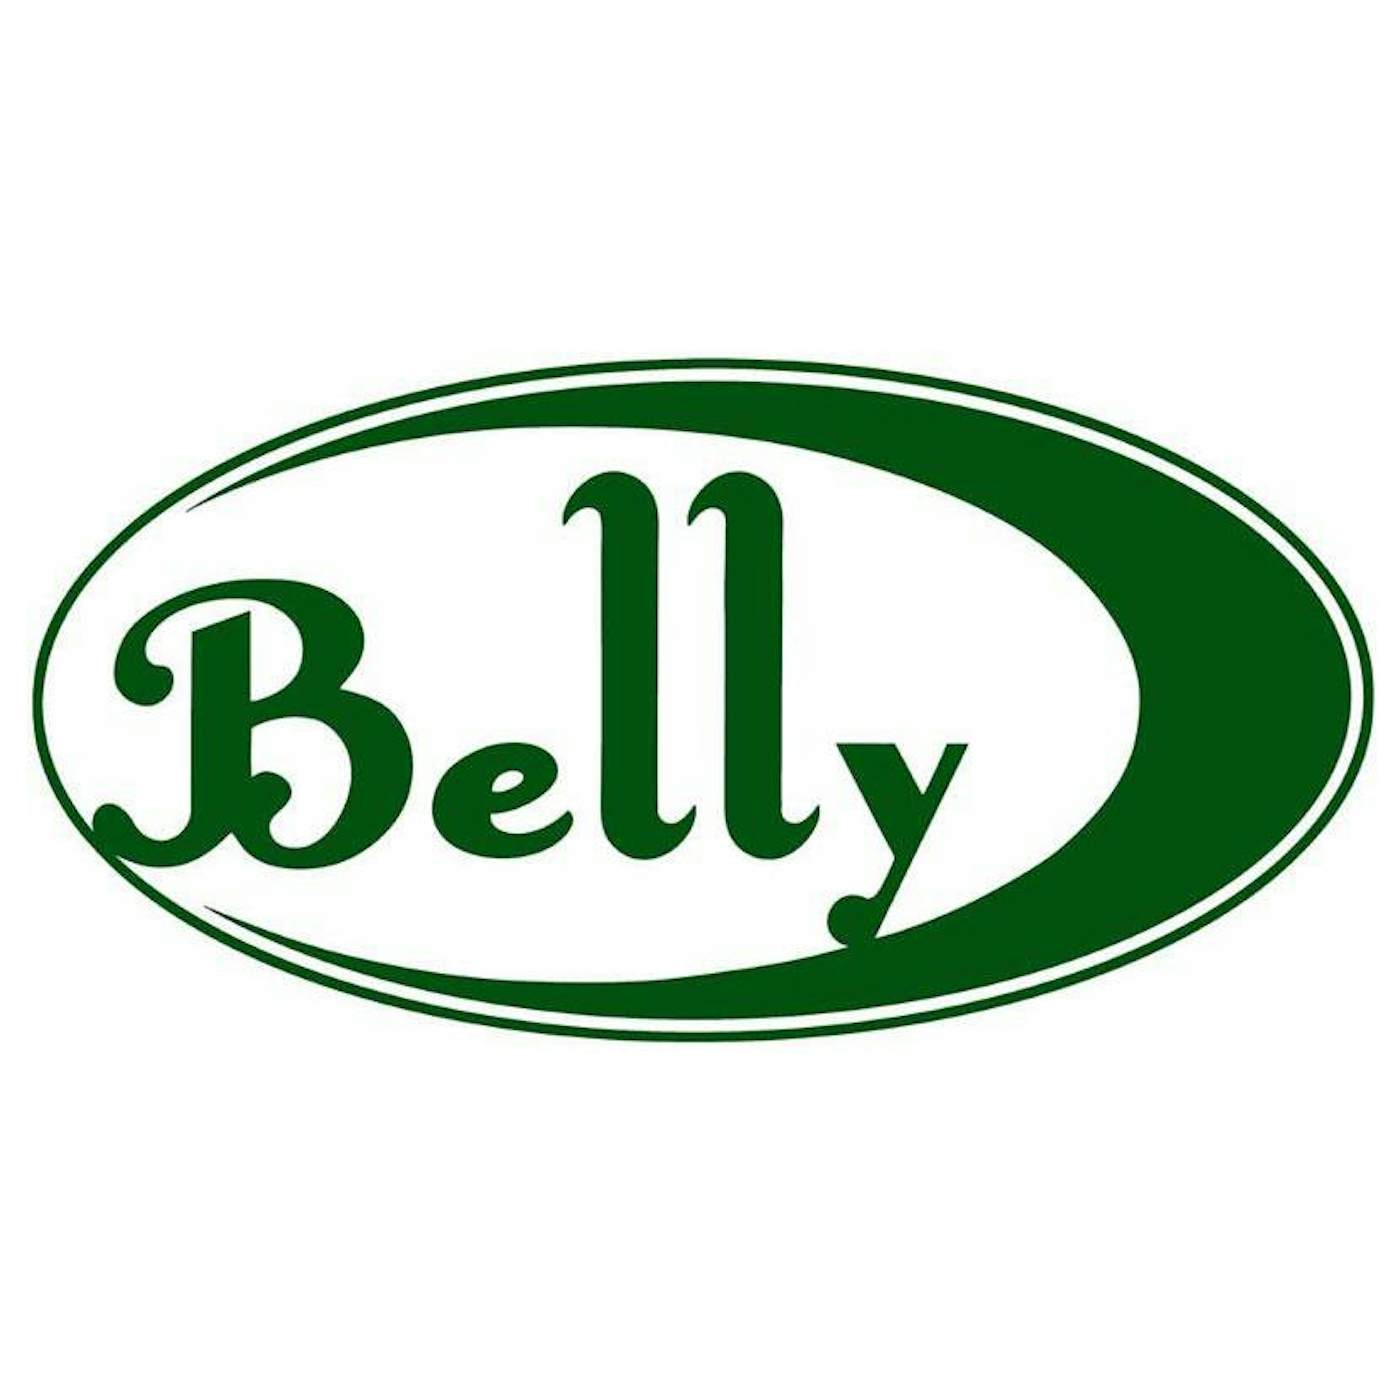 Belly Green Logo Sticker